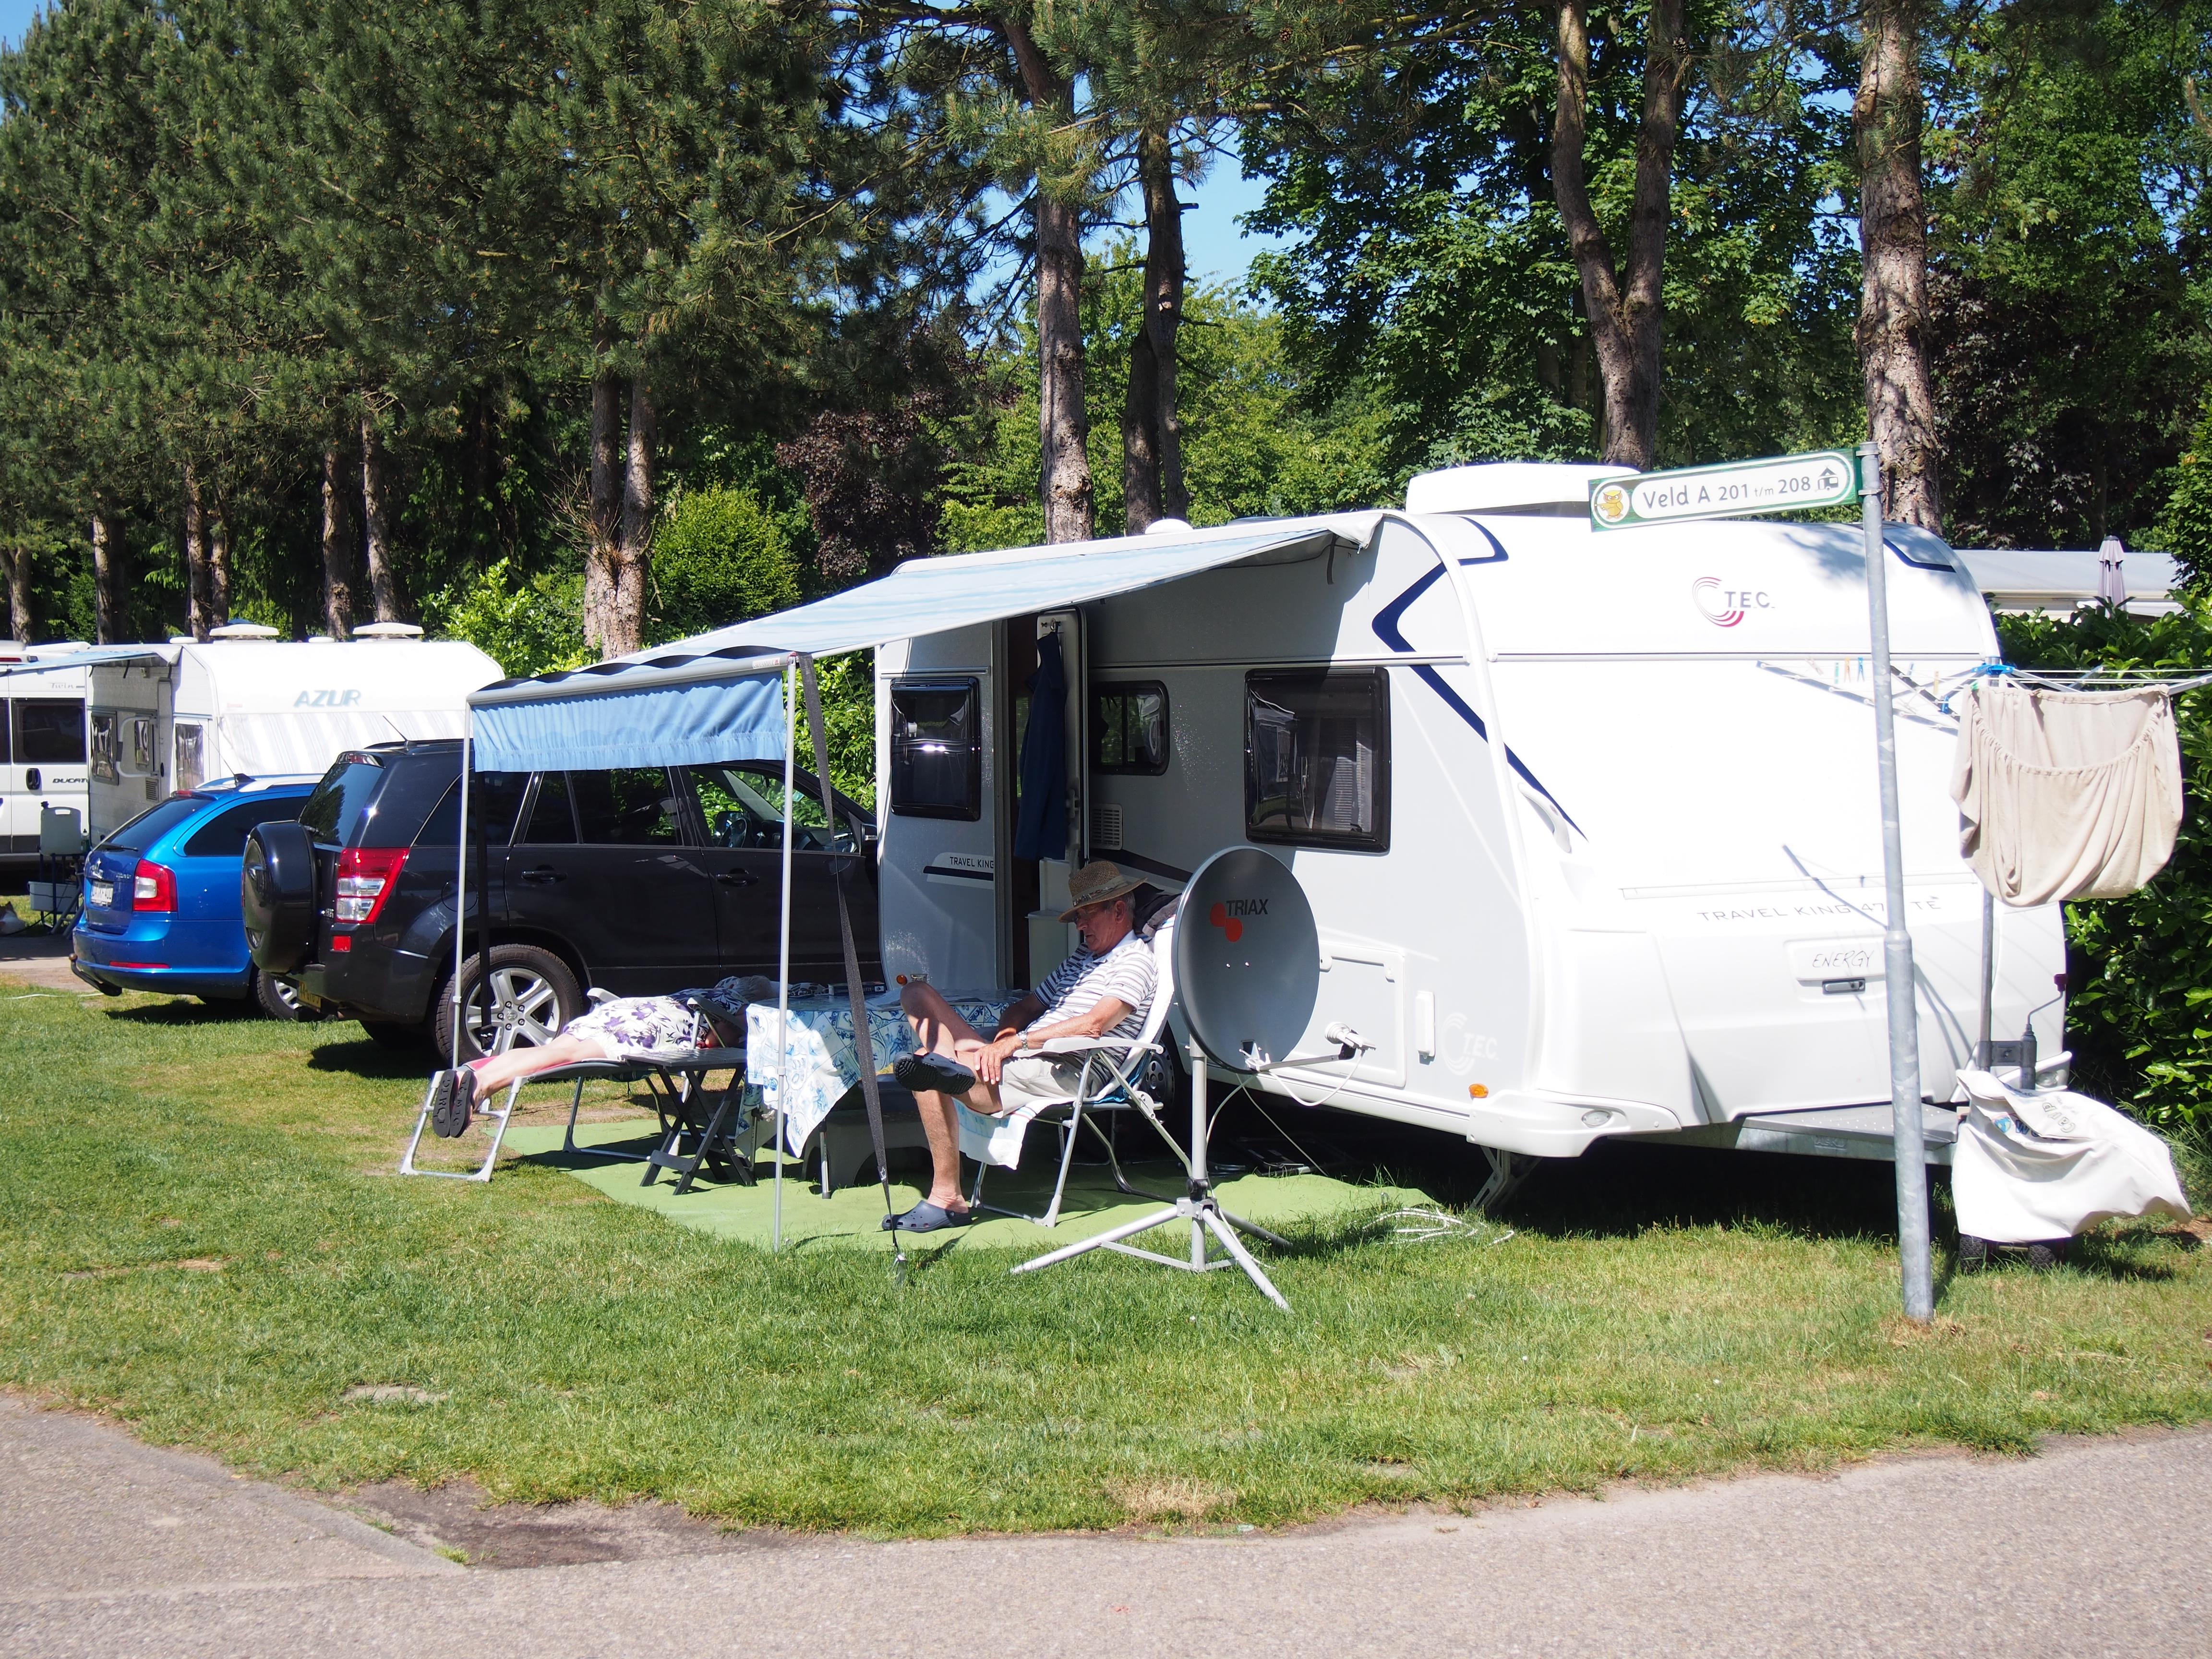 Camping pitch tent/caravan 10 amp, TV